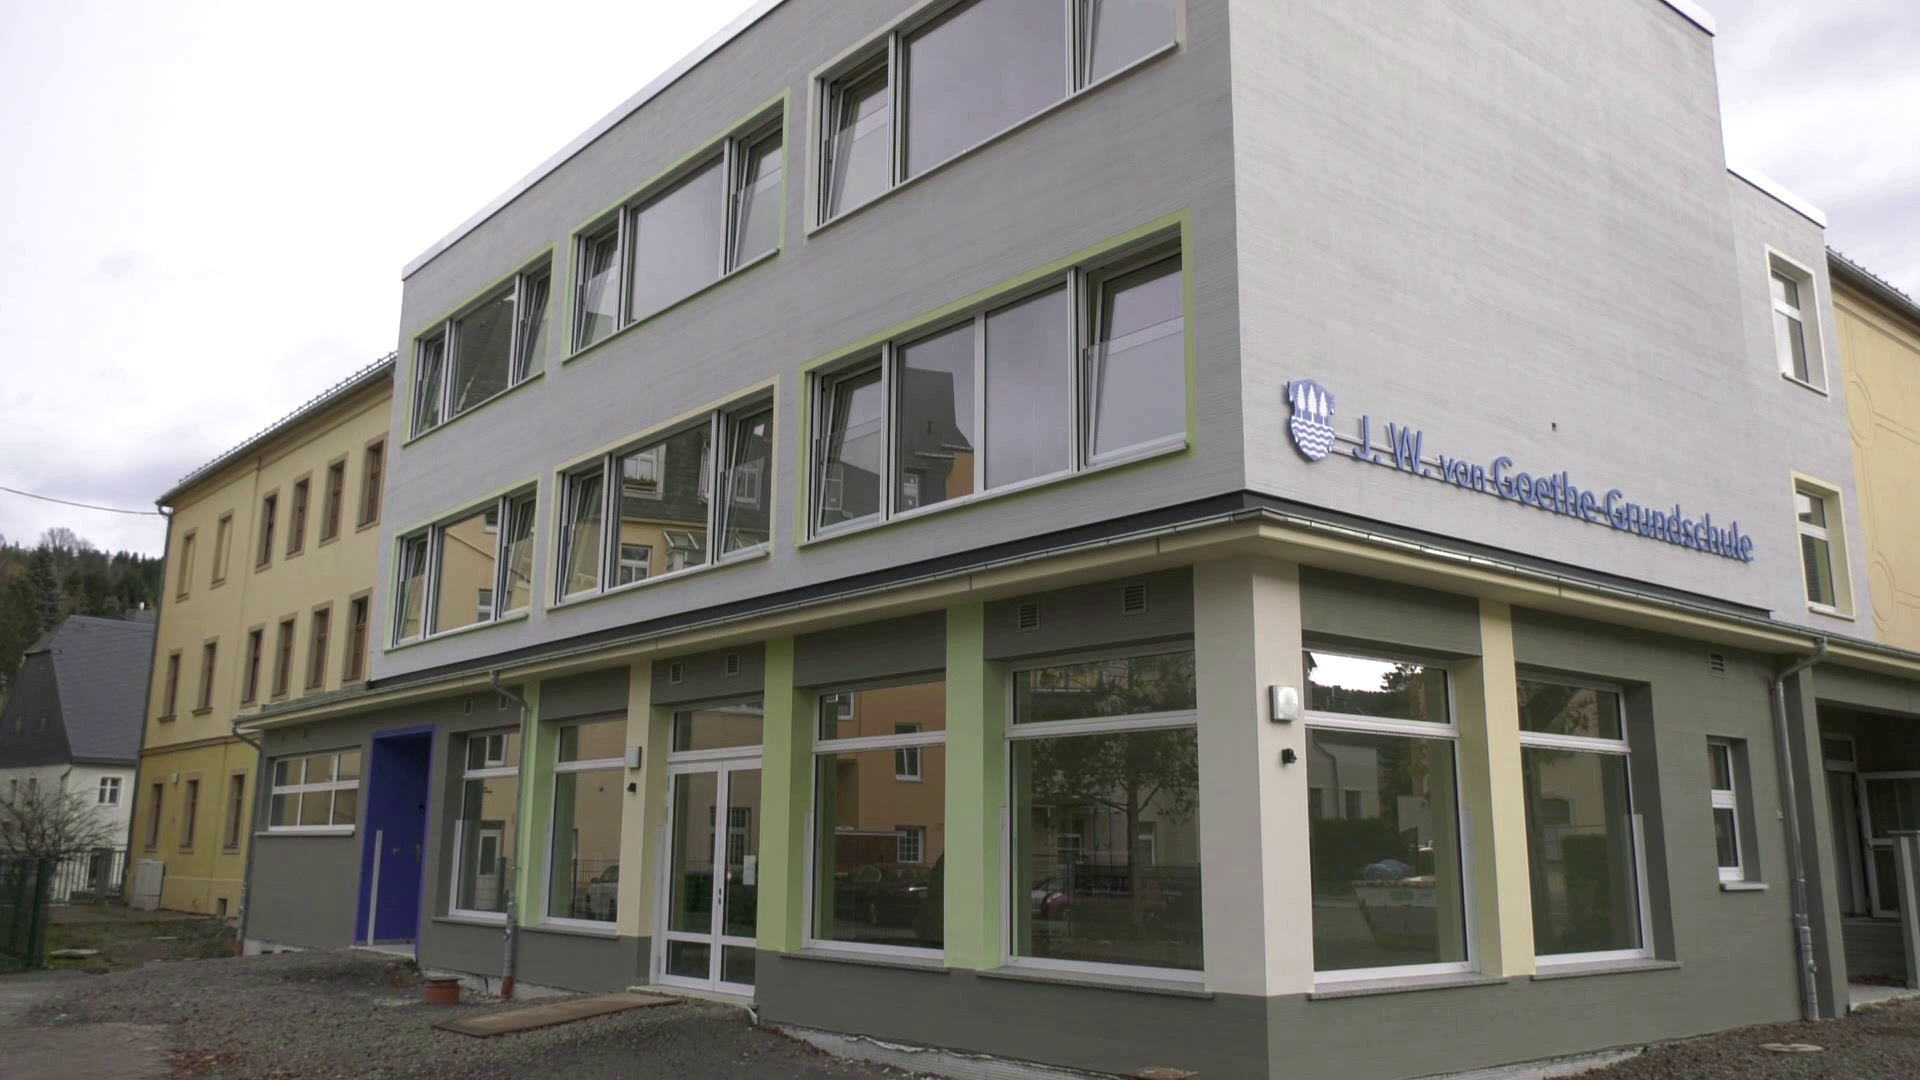 MEgional am 26. November mit der fast fertigen Goethe Grundschule in Olbernhau